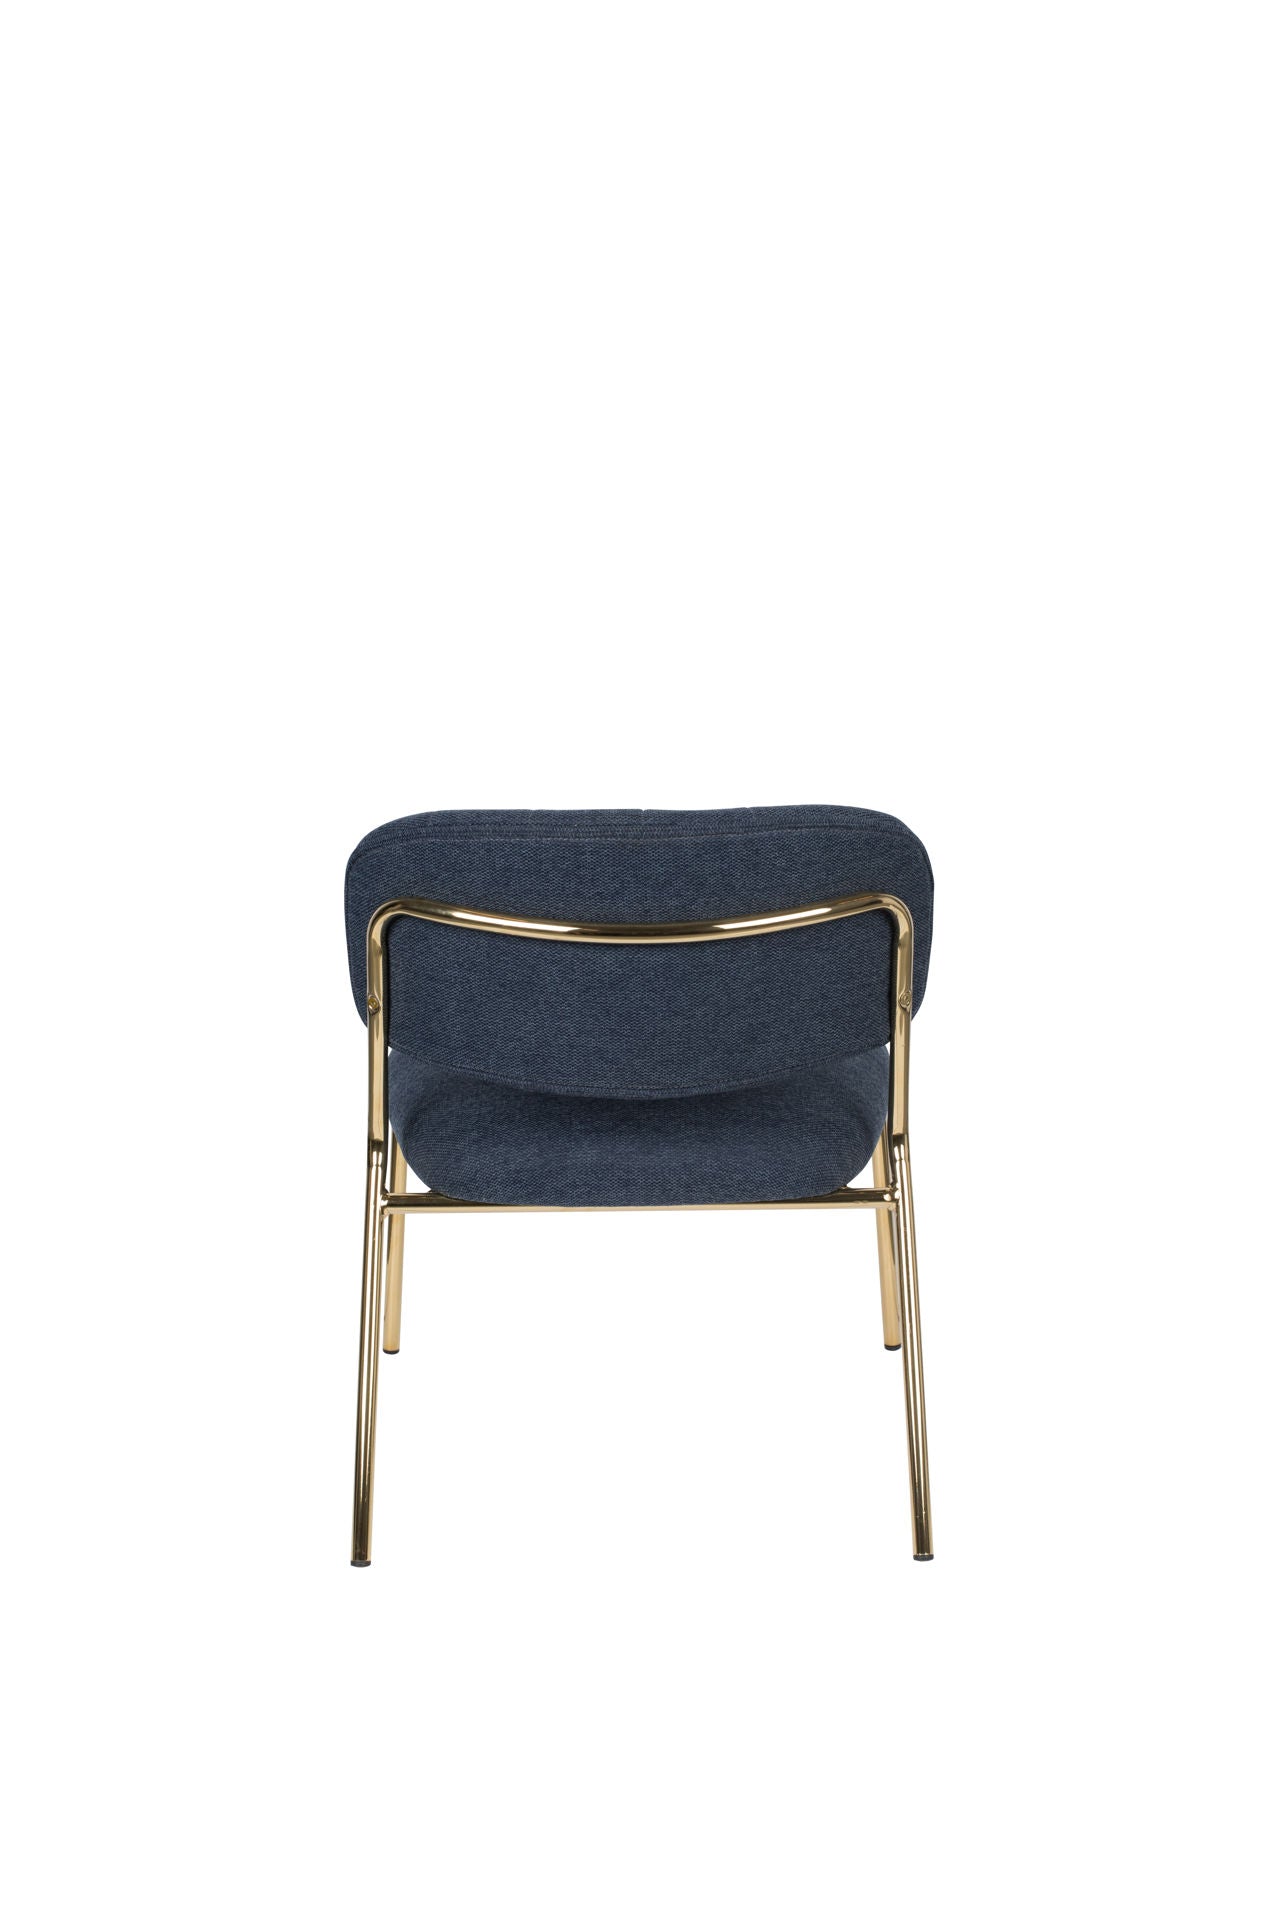 Nancy's Kalaoa Lounge Chair - Industrial - Dark Blue - Polyester, Plywood, Steel - 60 cm x 56 cm x 68 cm